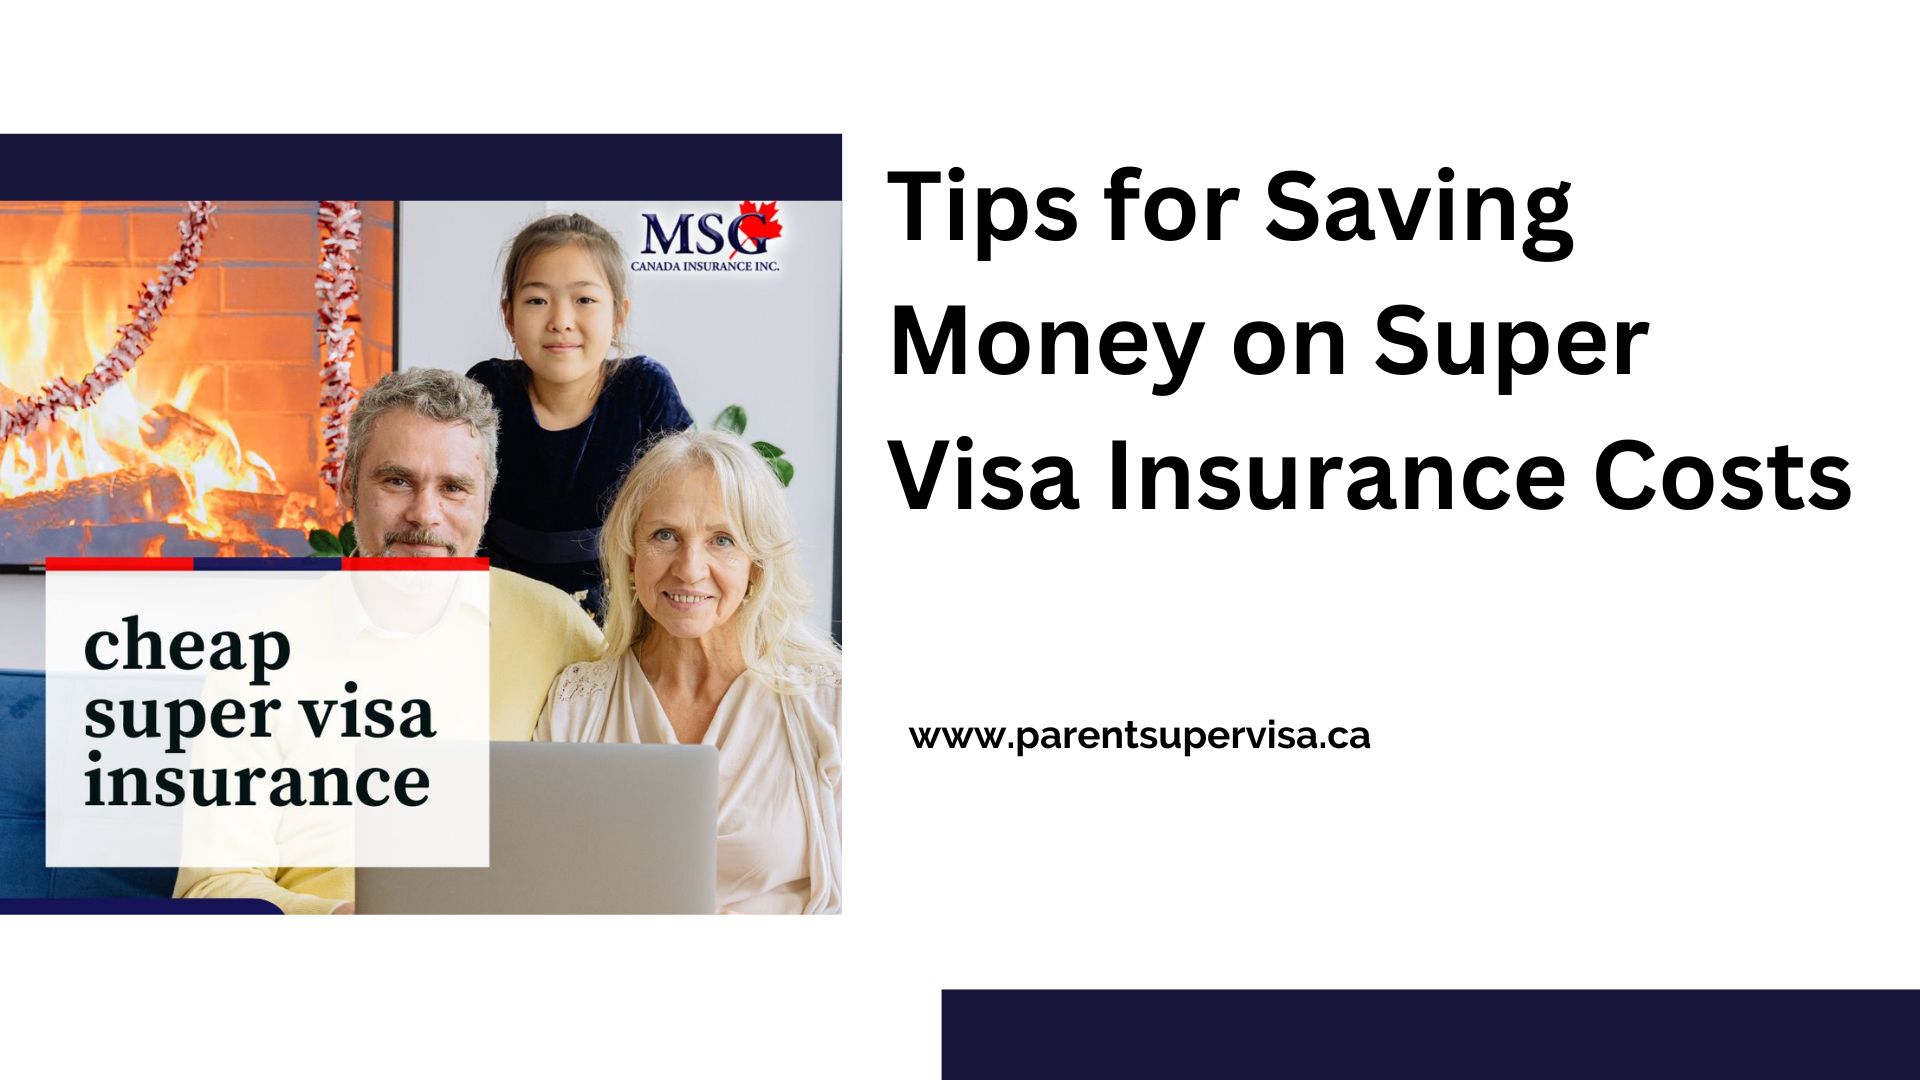 Tips for Saving Money on Super Visa Insurance Costs